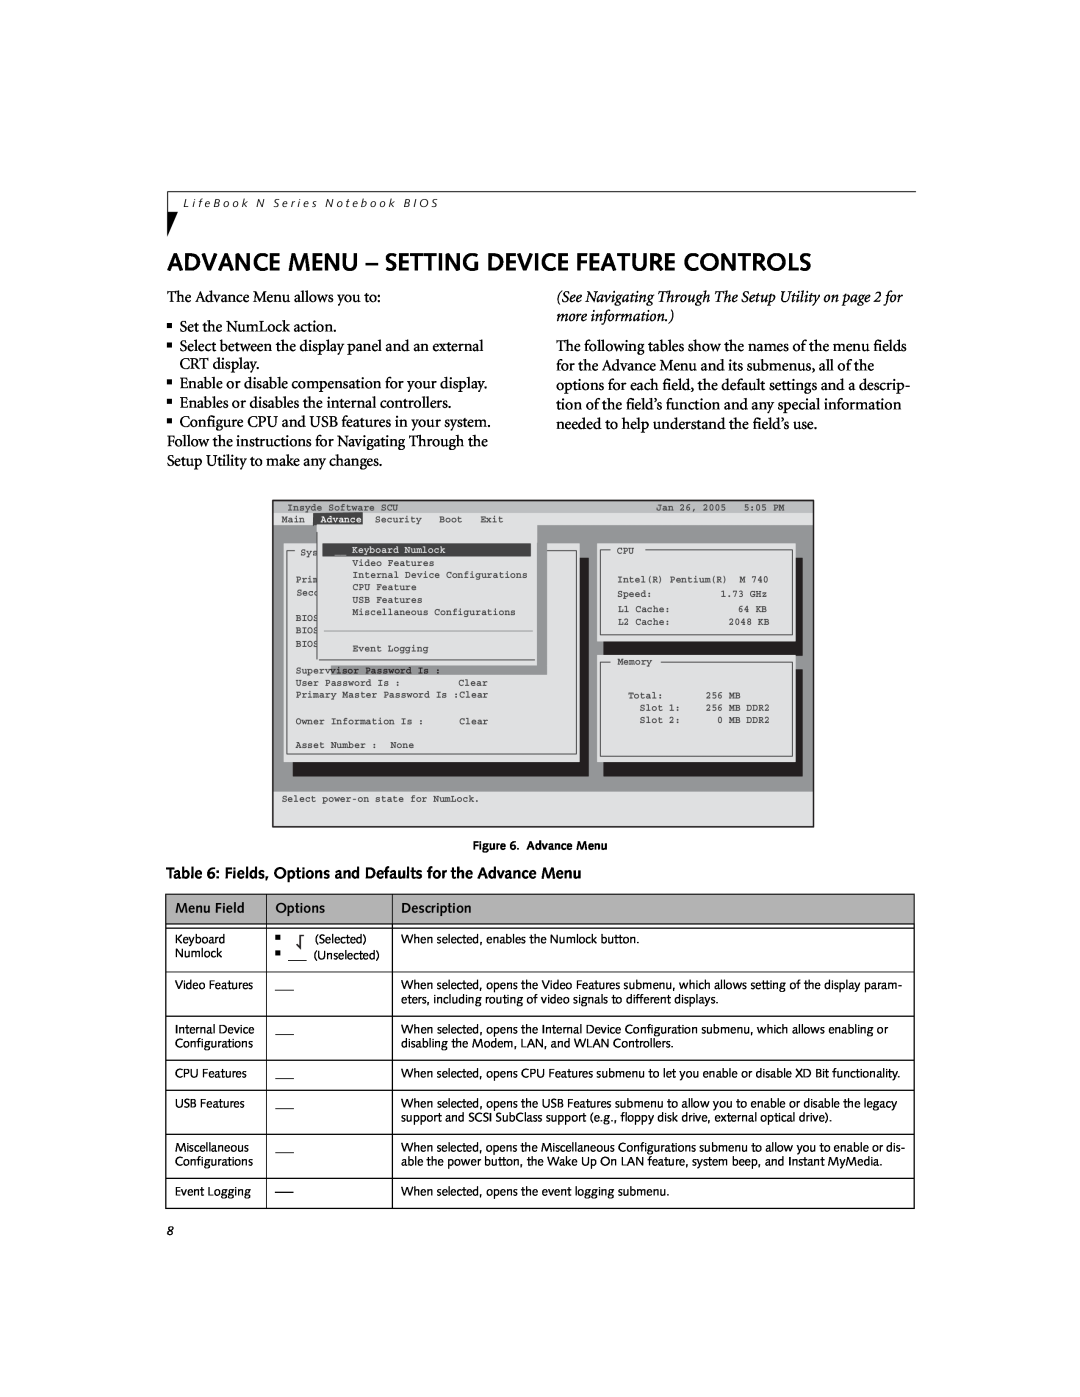 Fujitsu Siemens Computers N3510 manual Advance Menu - Setting Device Feature Controls, Menu Field, Options, Description 